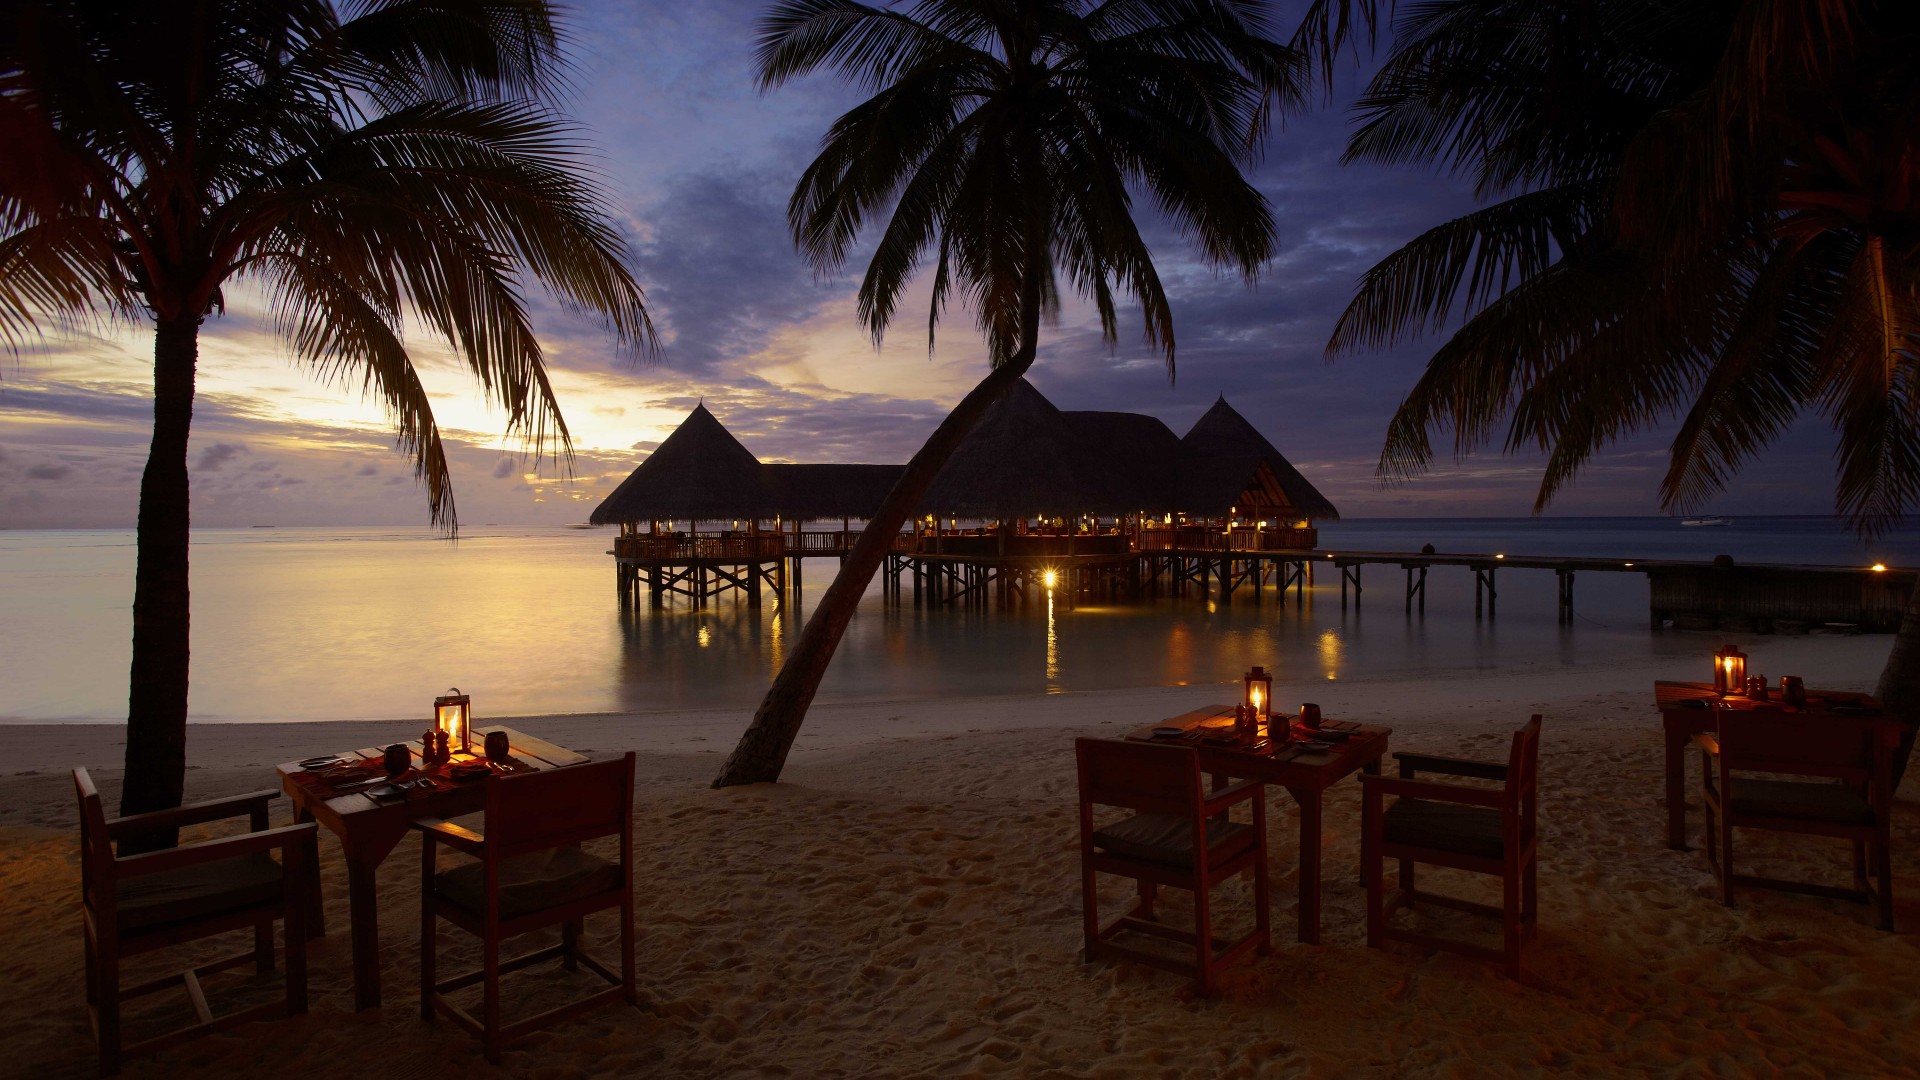 Гили Ланкафуши, Мальдивы, лучшие отели, туризм, путешествие, курорт, остров Ланкафуши, северный Мейл Атолл, Gili Lankanfushi, Maldives, Best Hotels of 2017, Best beaches of 2017, tourism, travel, vacation, resort, beach, Lankanfushi Island, North Male Atoll (horizontal)